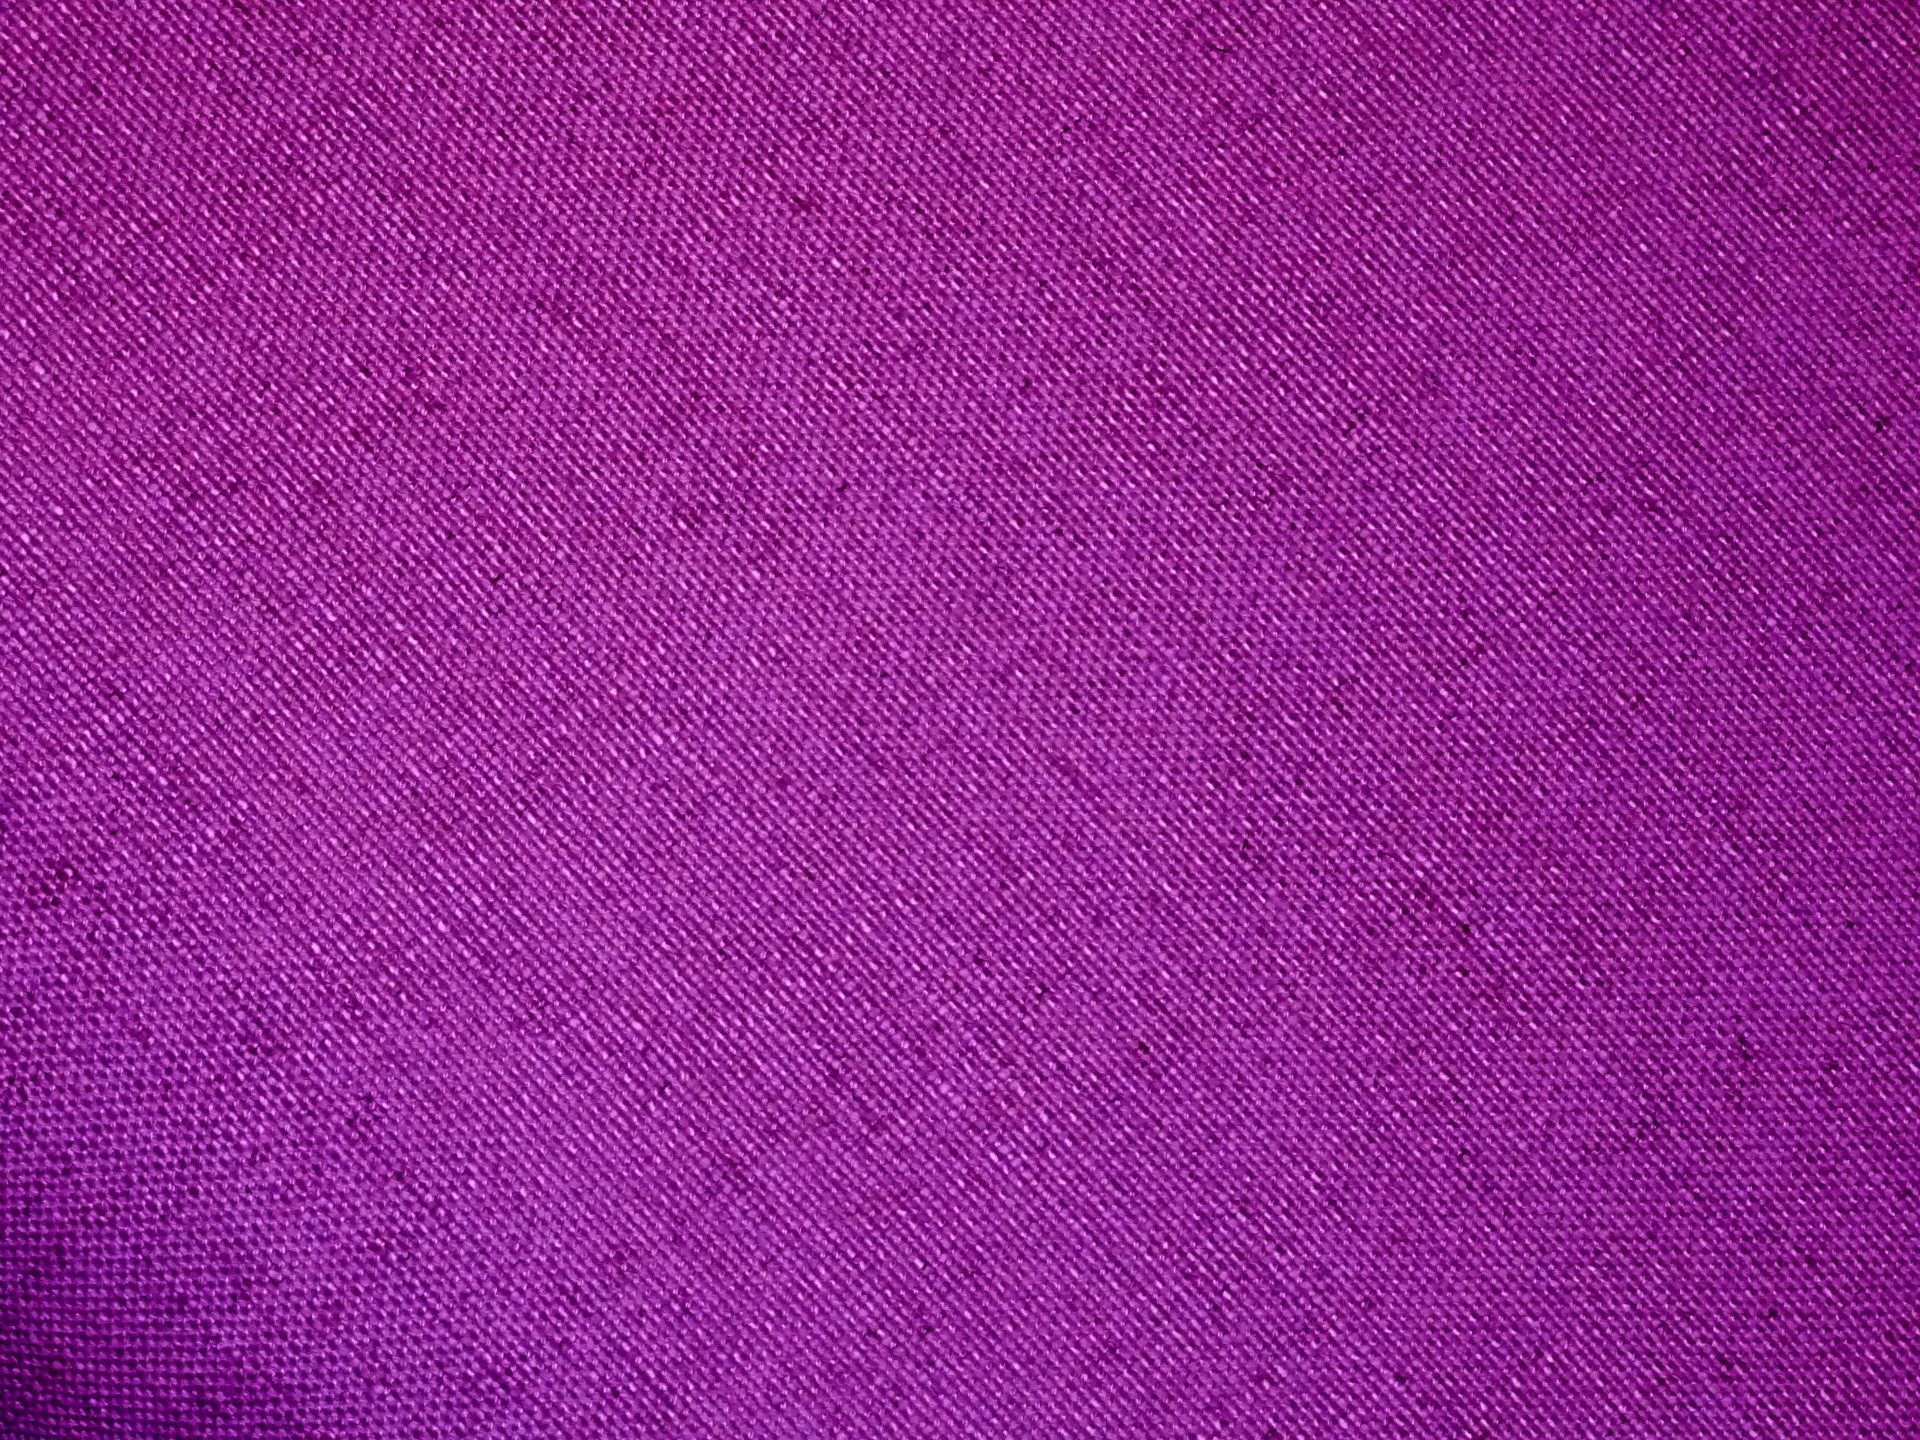 1920x1440, Purple Hessian Fabric Background 
 Data - Pattern - HD Wallpaper 